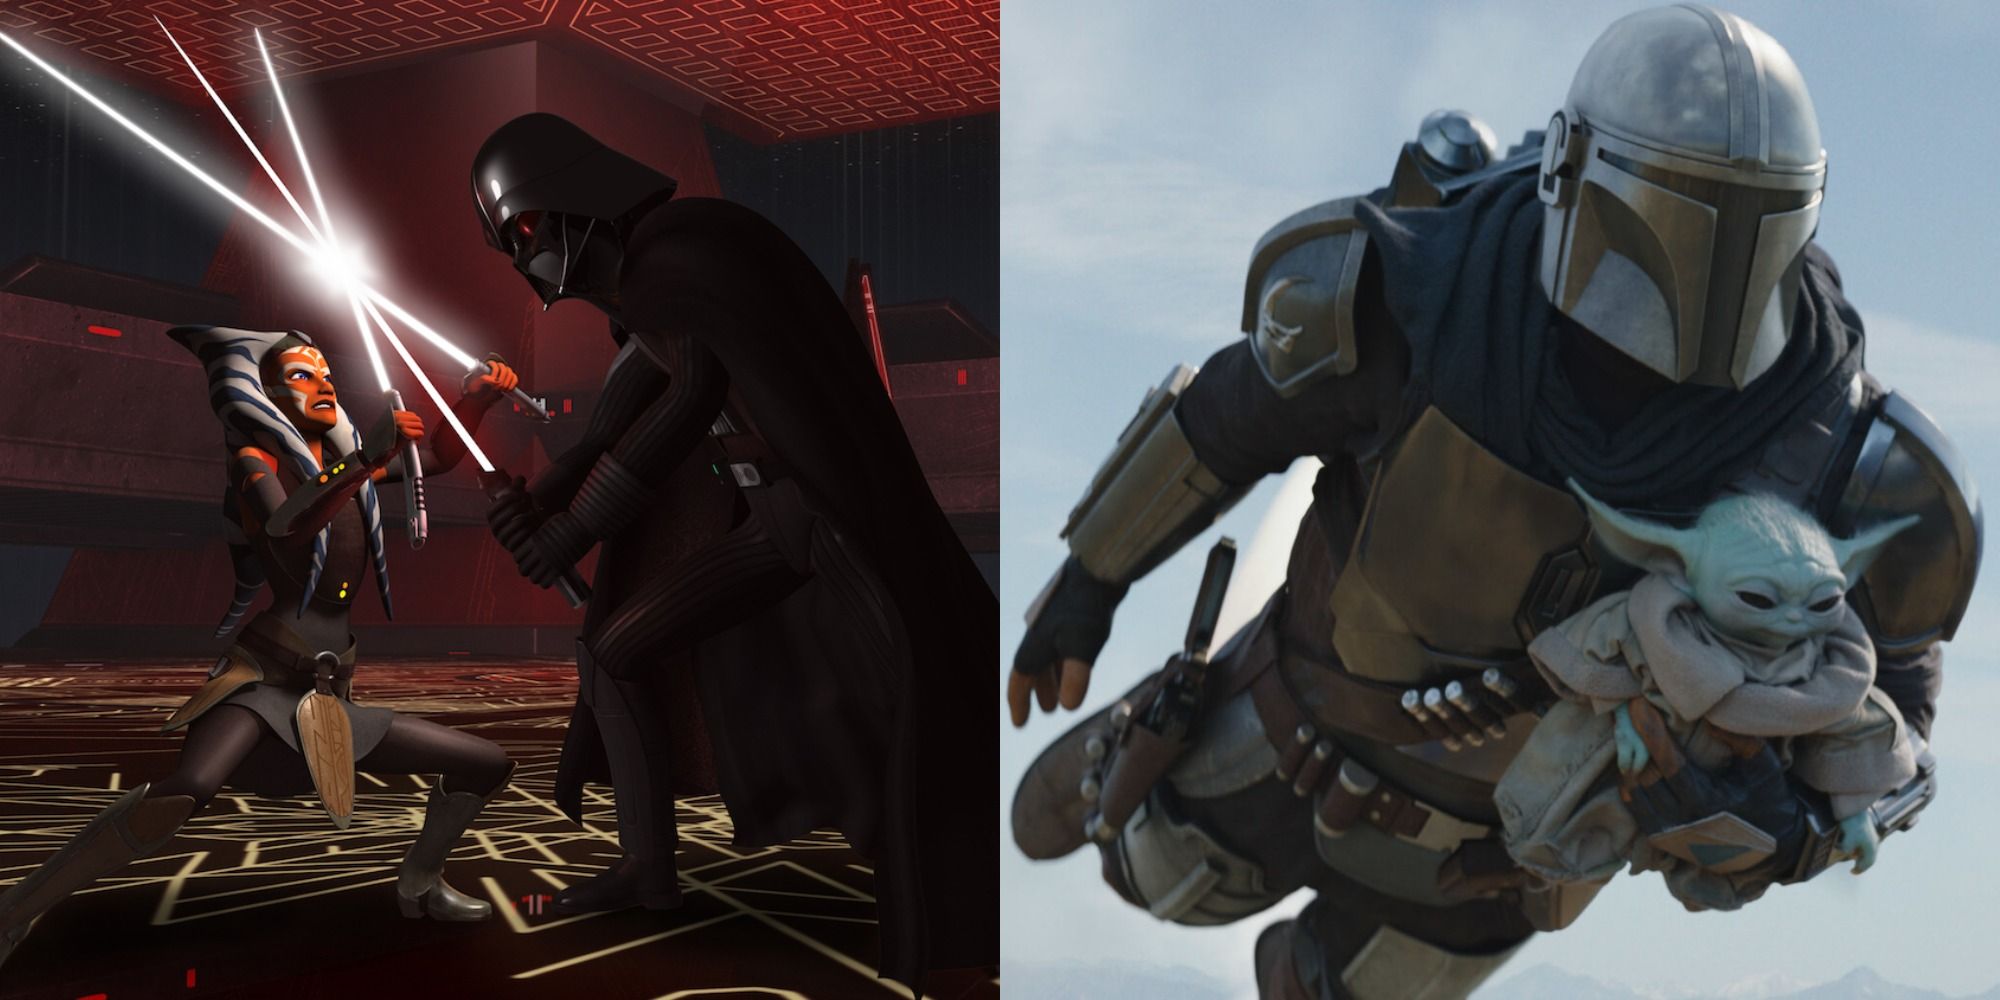 Split image of Ahsoka fighting Darth Vader and Din Djarin flying with Grogu